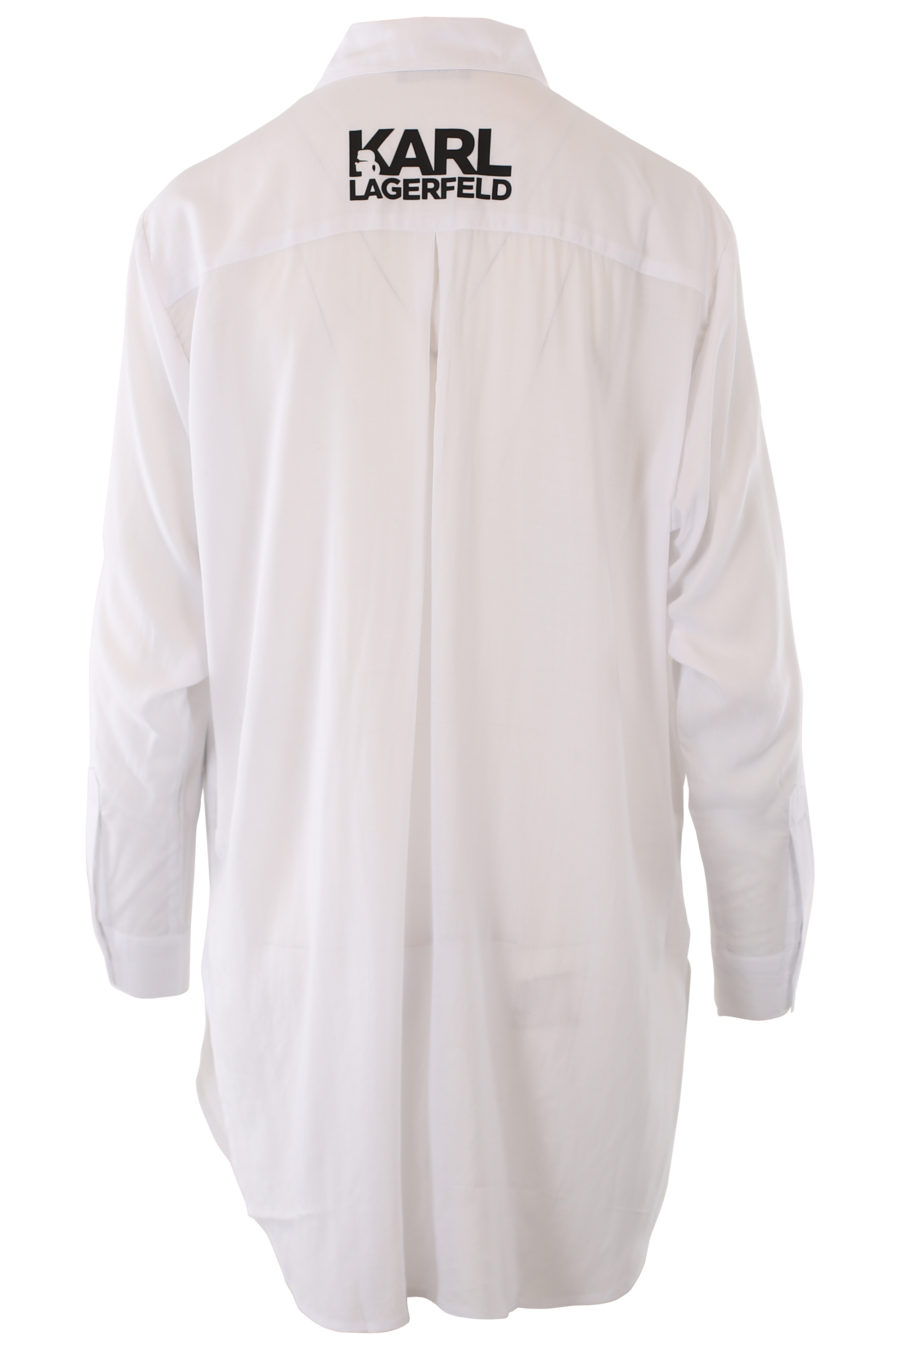 Camisa larga blanca con logo negro detrás - IMG 1261